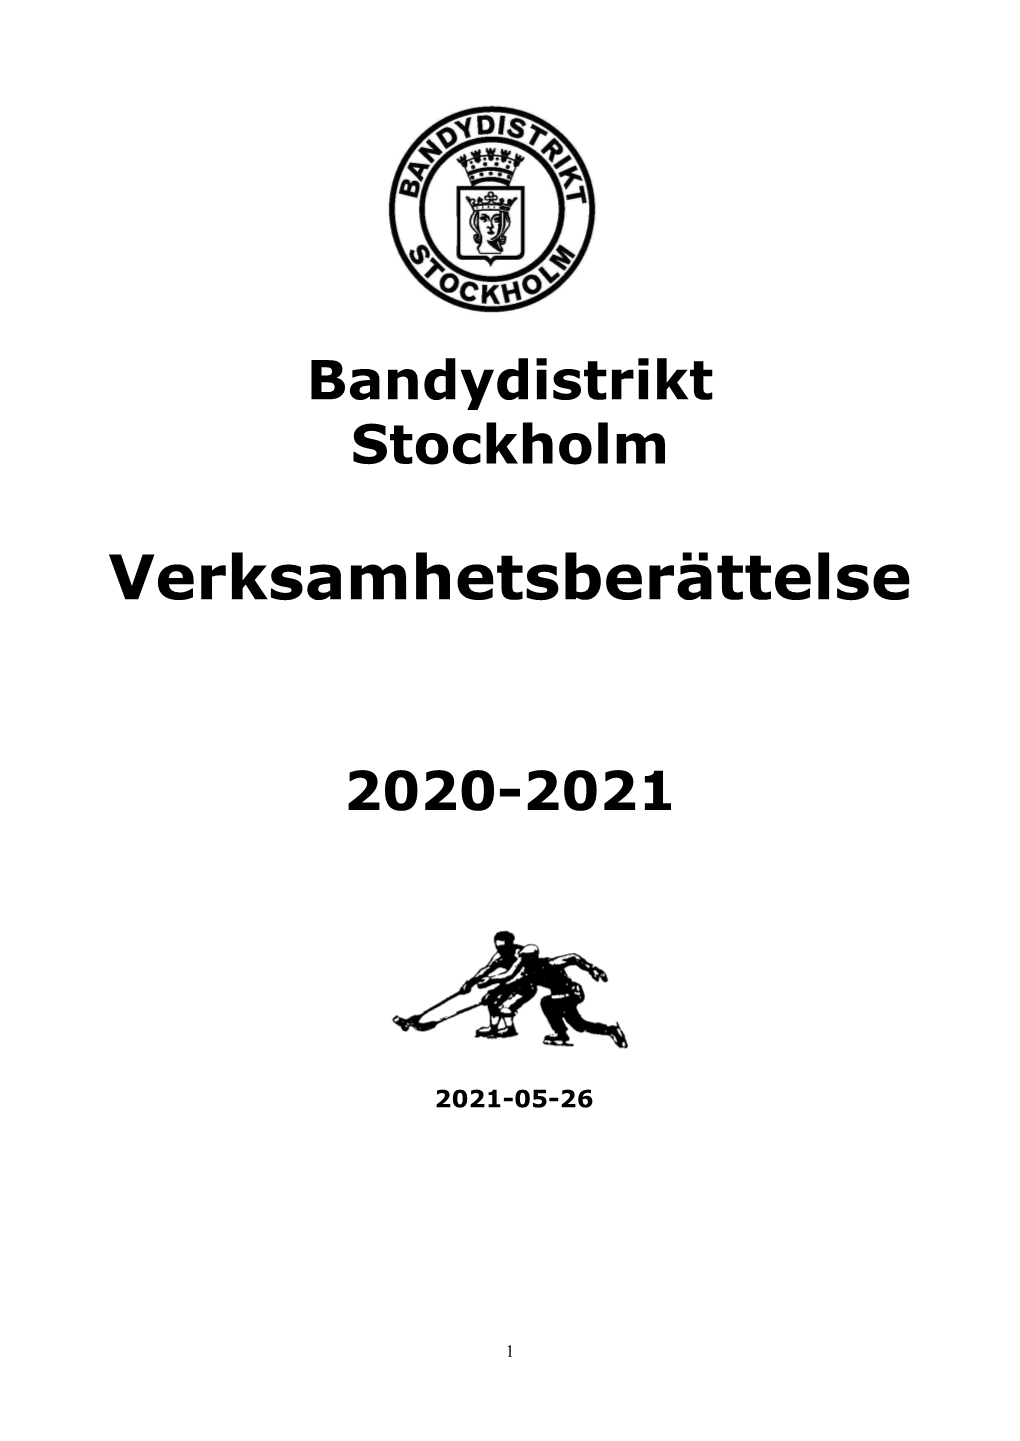 Verksamhetsberättelse 2020/2021